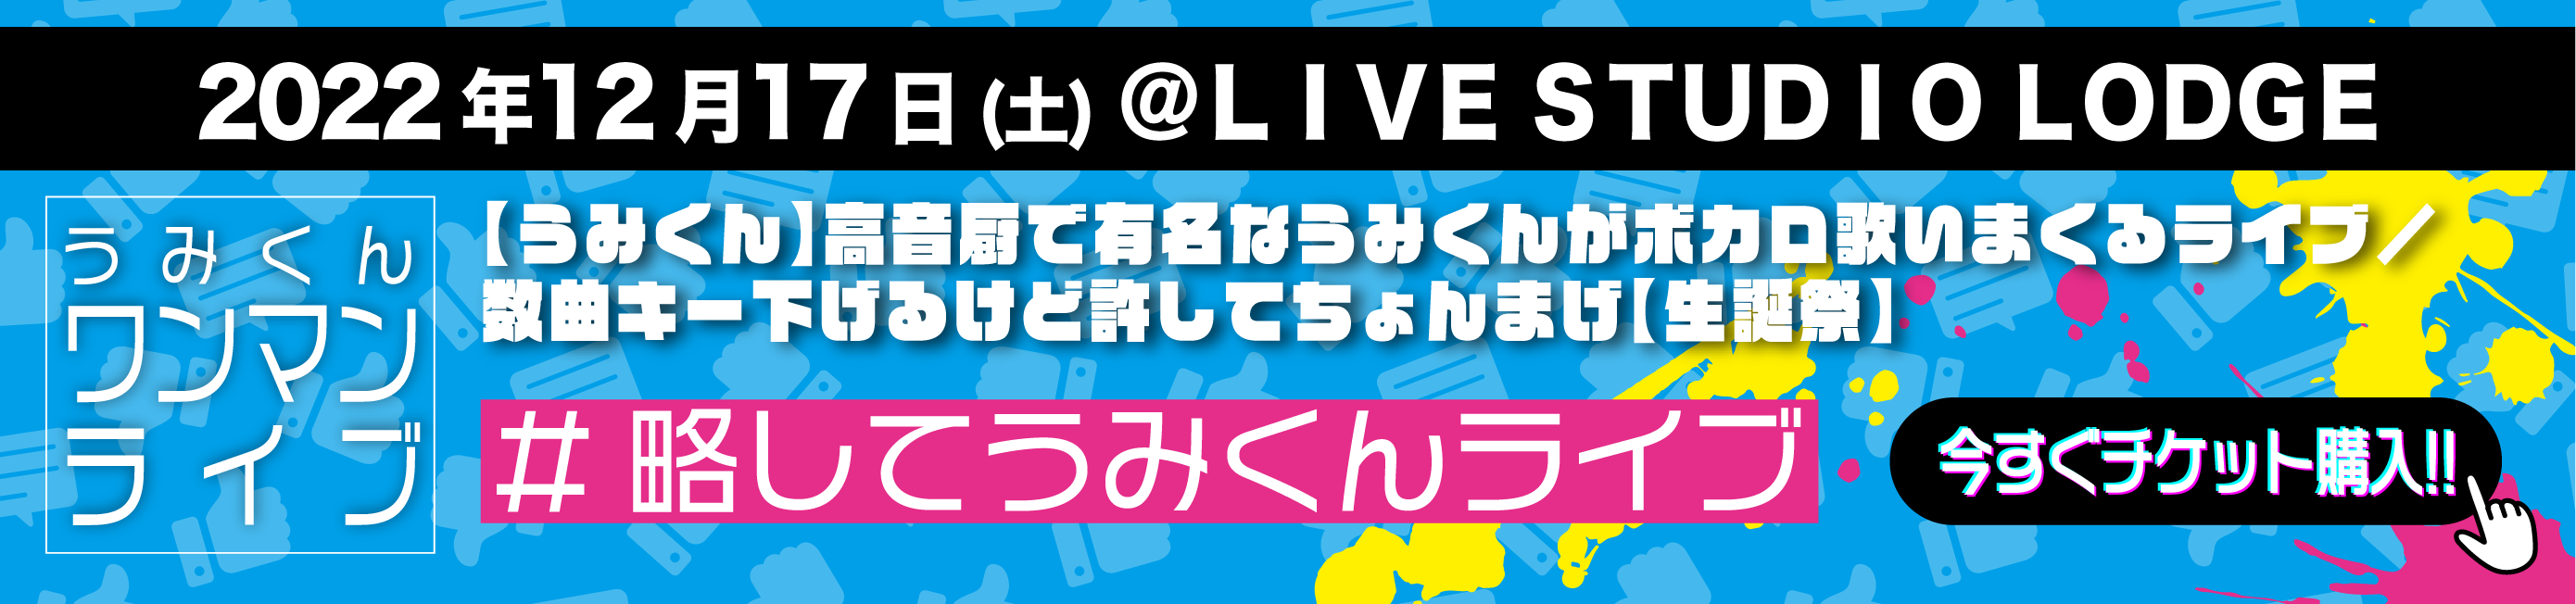 umikun_banner_LIVE02